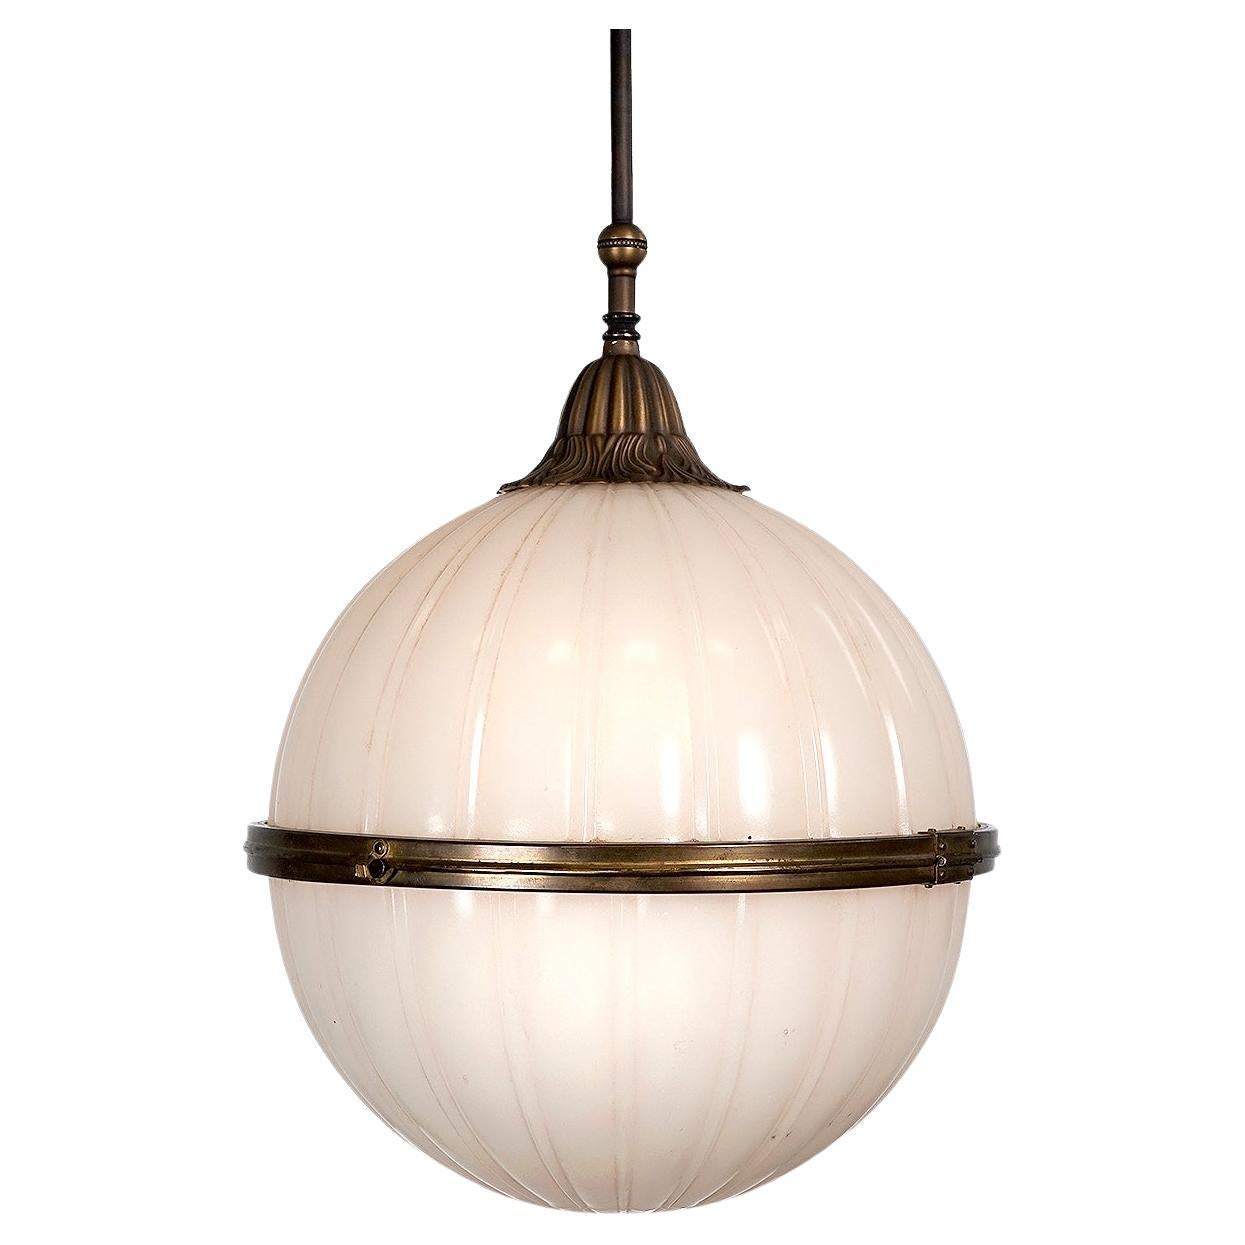 Split Dome Fluted Globe Lamp